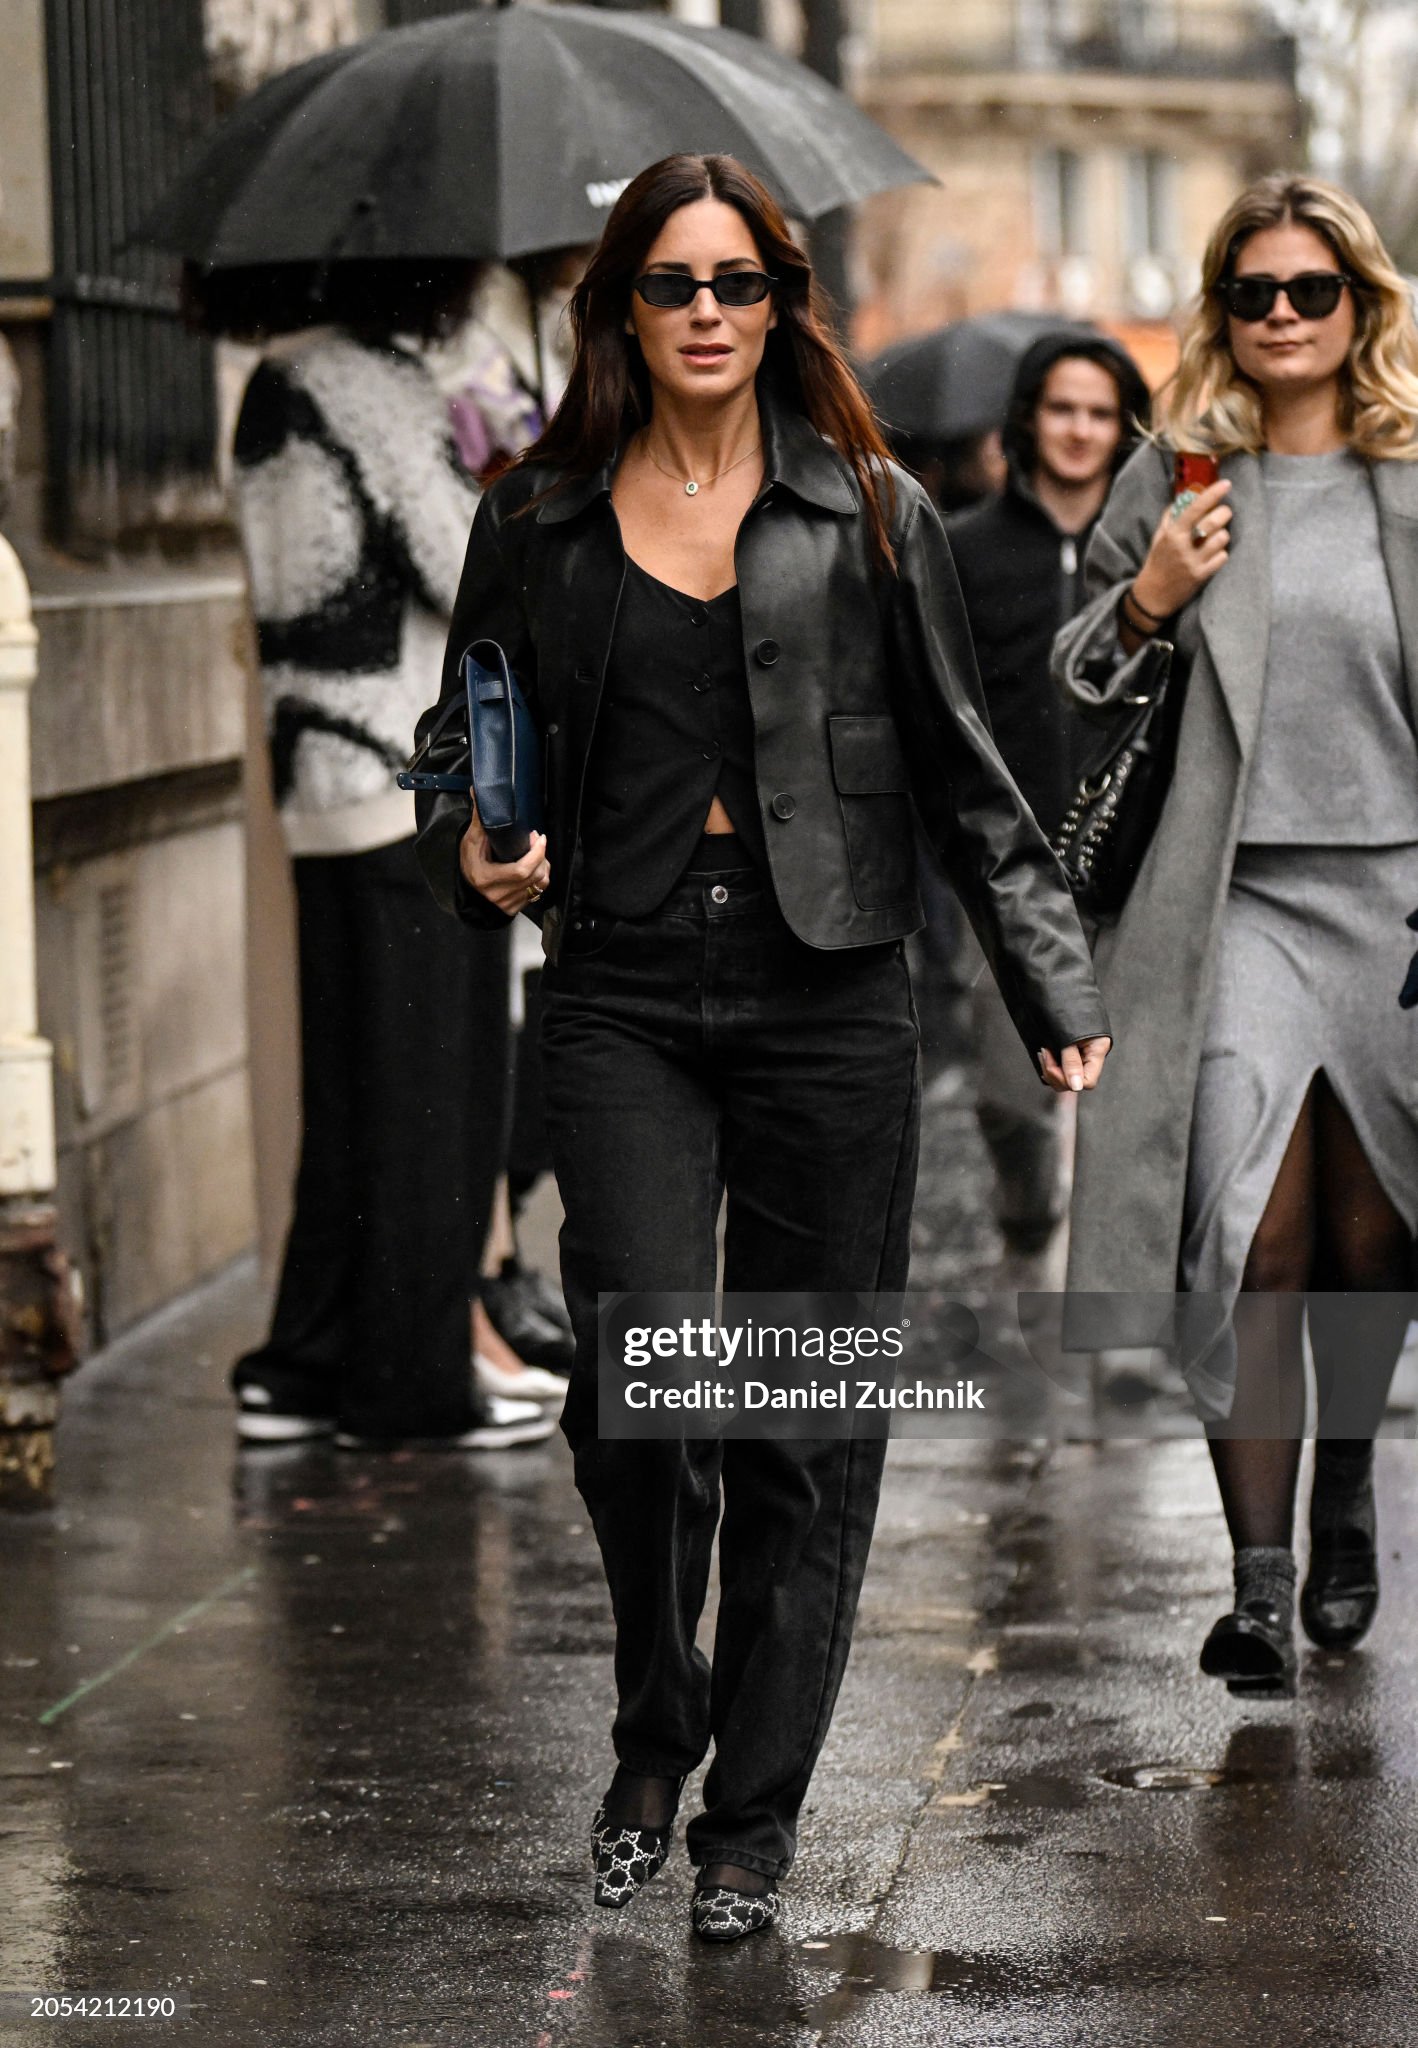 paris-france-gala-gonzalez-is-seen-wearing-a-black-hermes-jacket-black-top-black-jeans-black.jpg